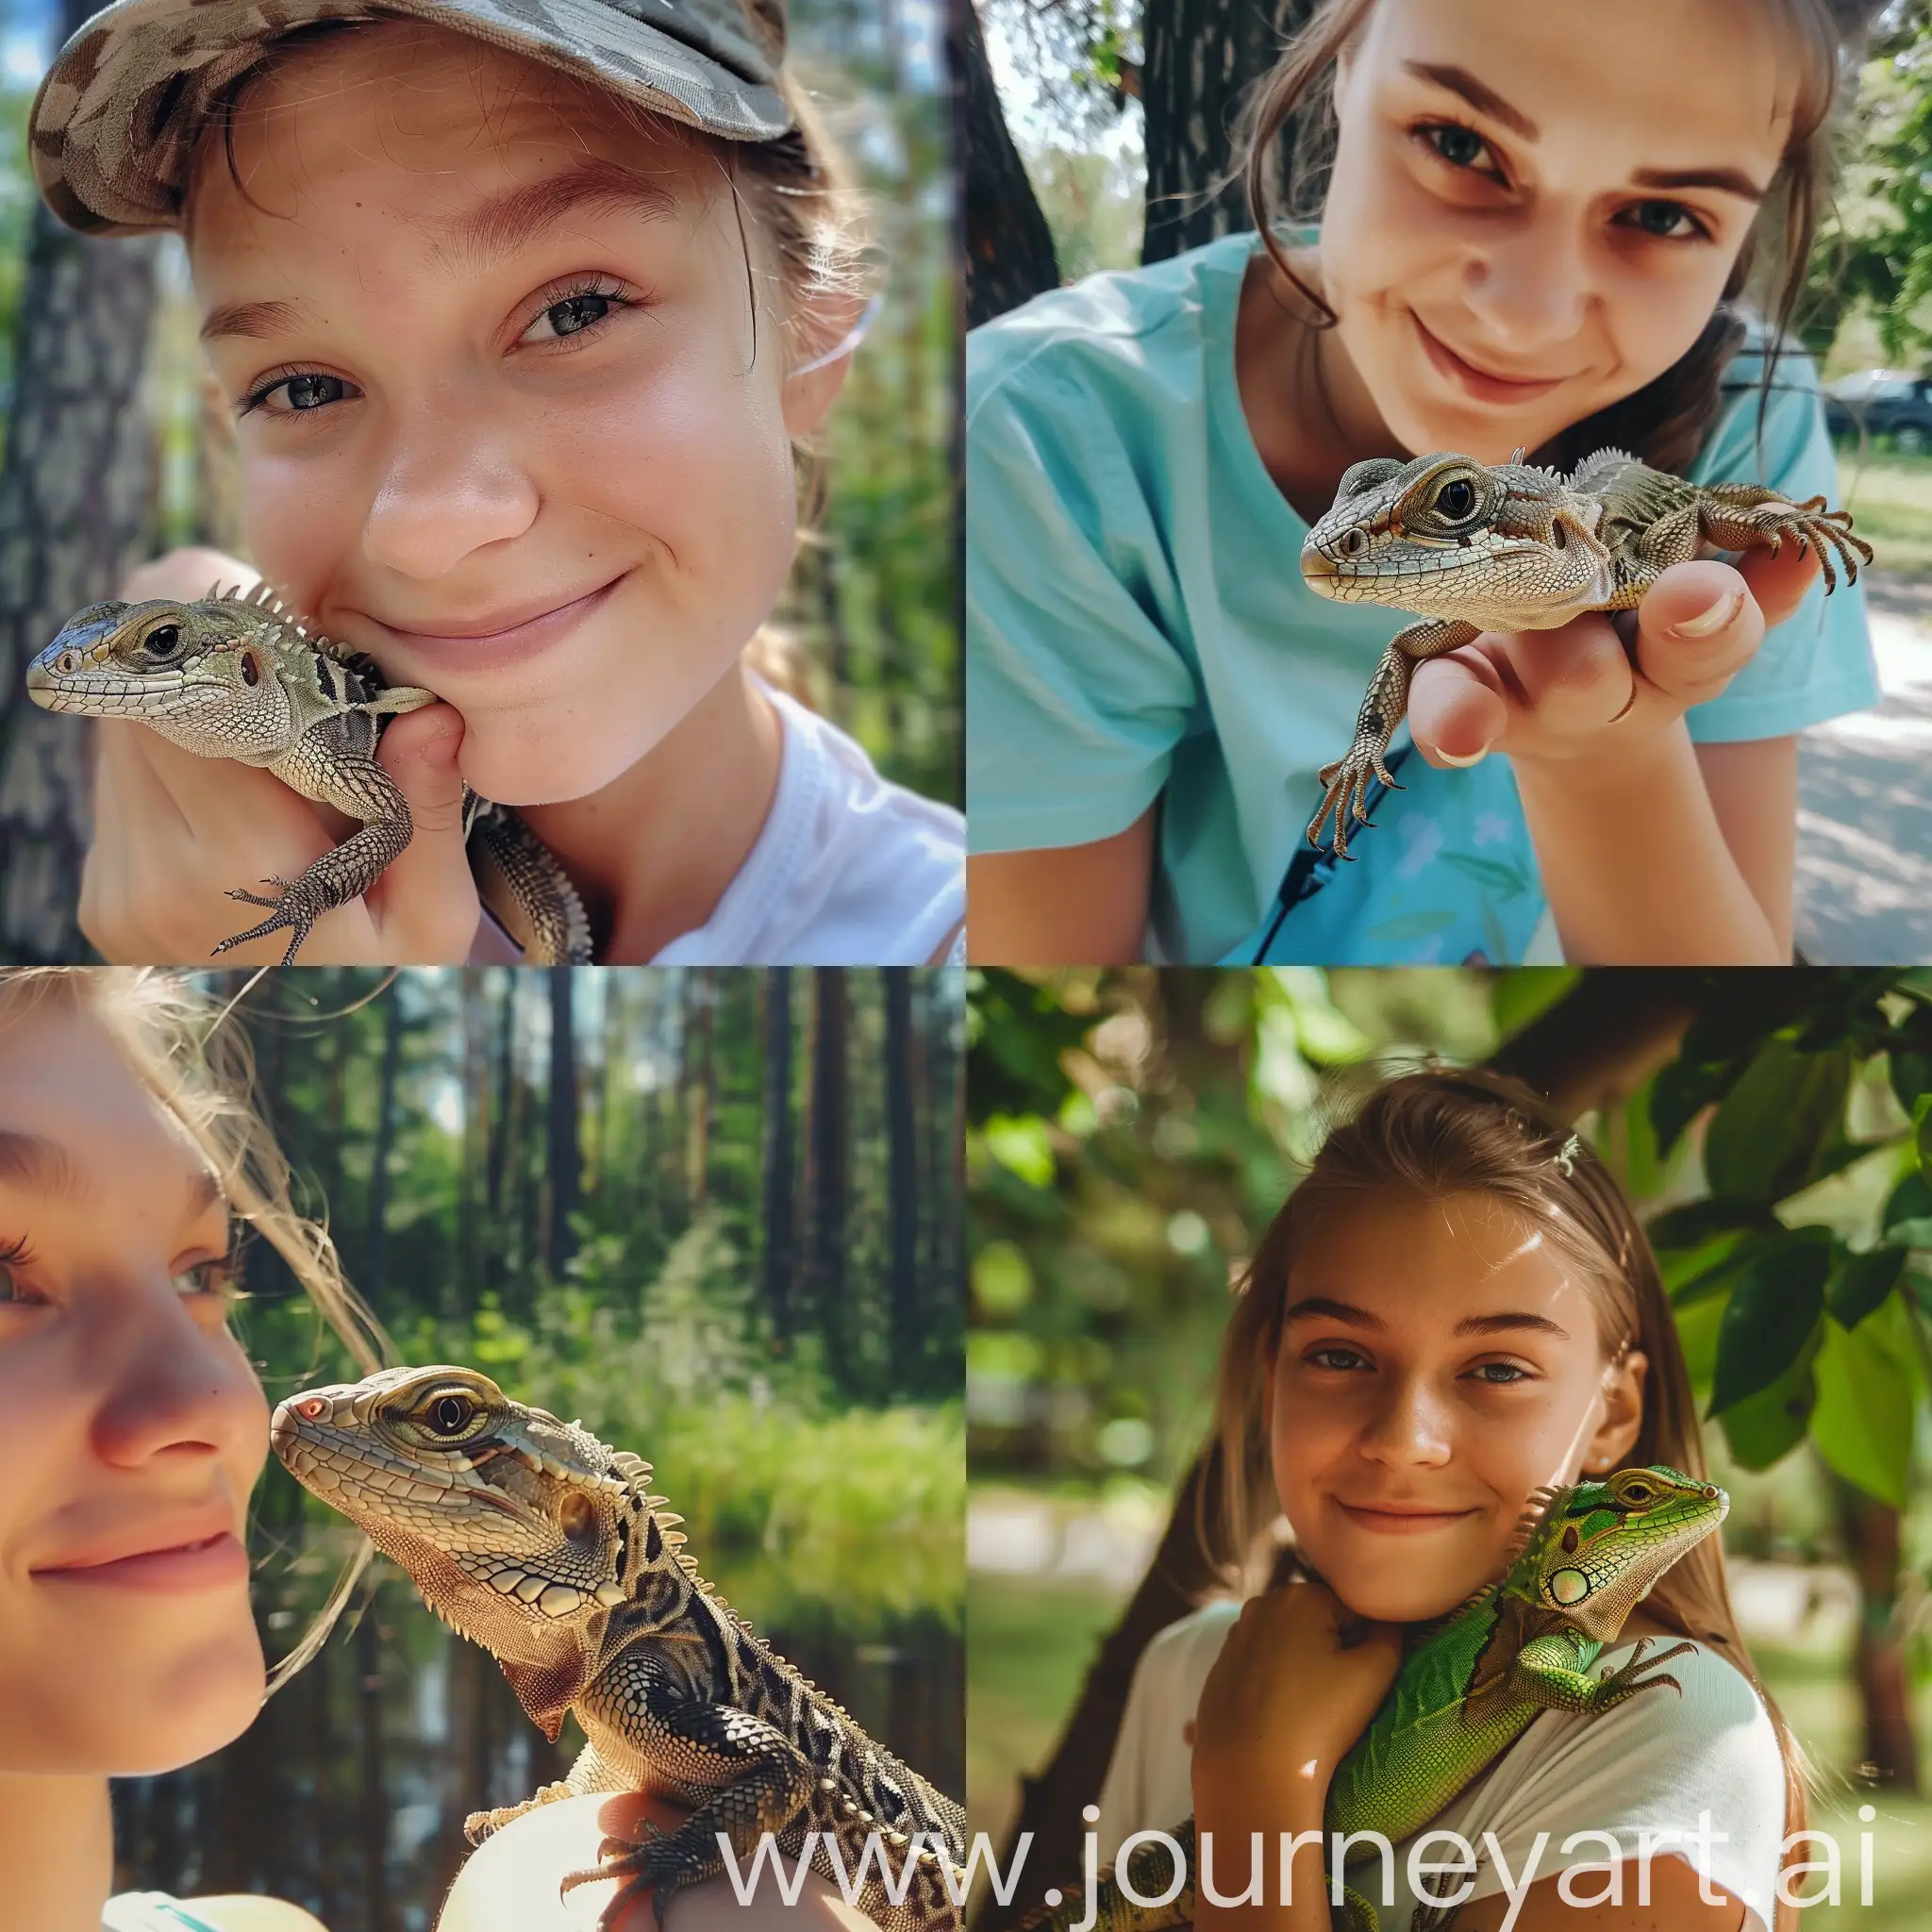 Summer-Fun-Girl-and-Lizard-Enjoying-a-Trip-to-Yaroslavl-with-Friends